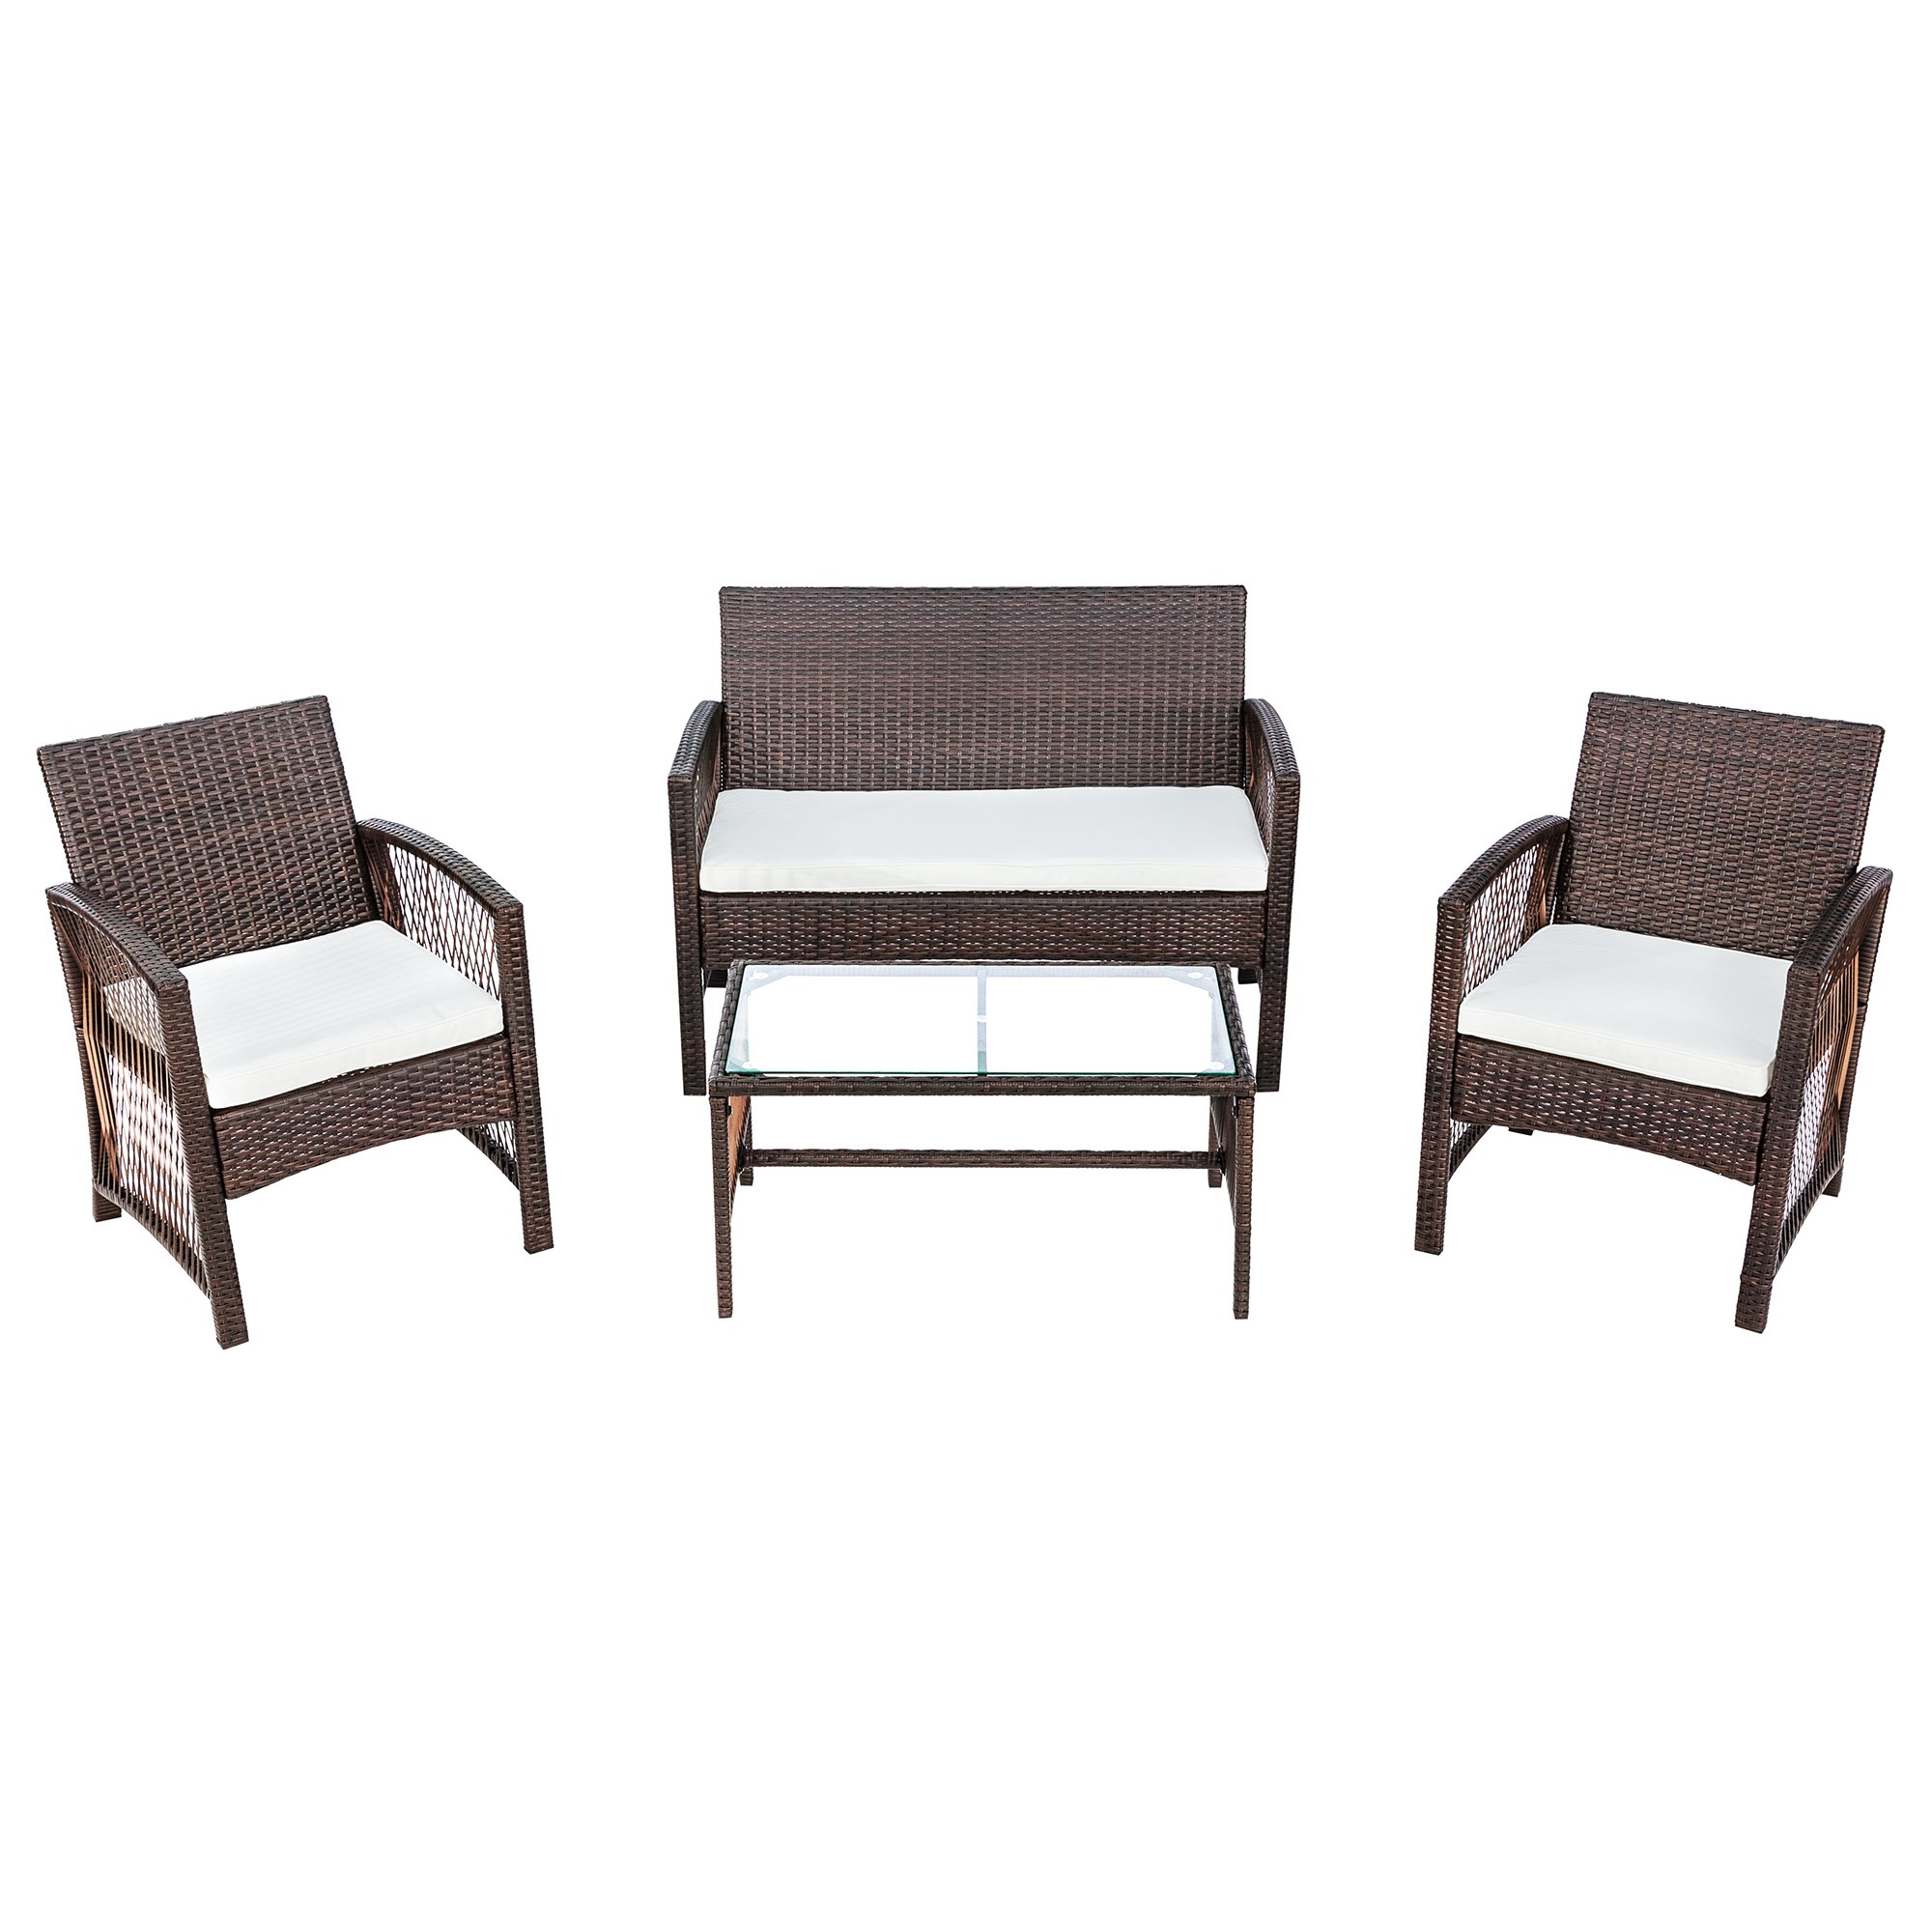 4-Piece Outdoor Furniture Rattan Chair & Table Patio Set Outdoor Sofa,Brown-CASAINC